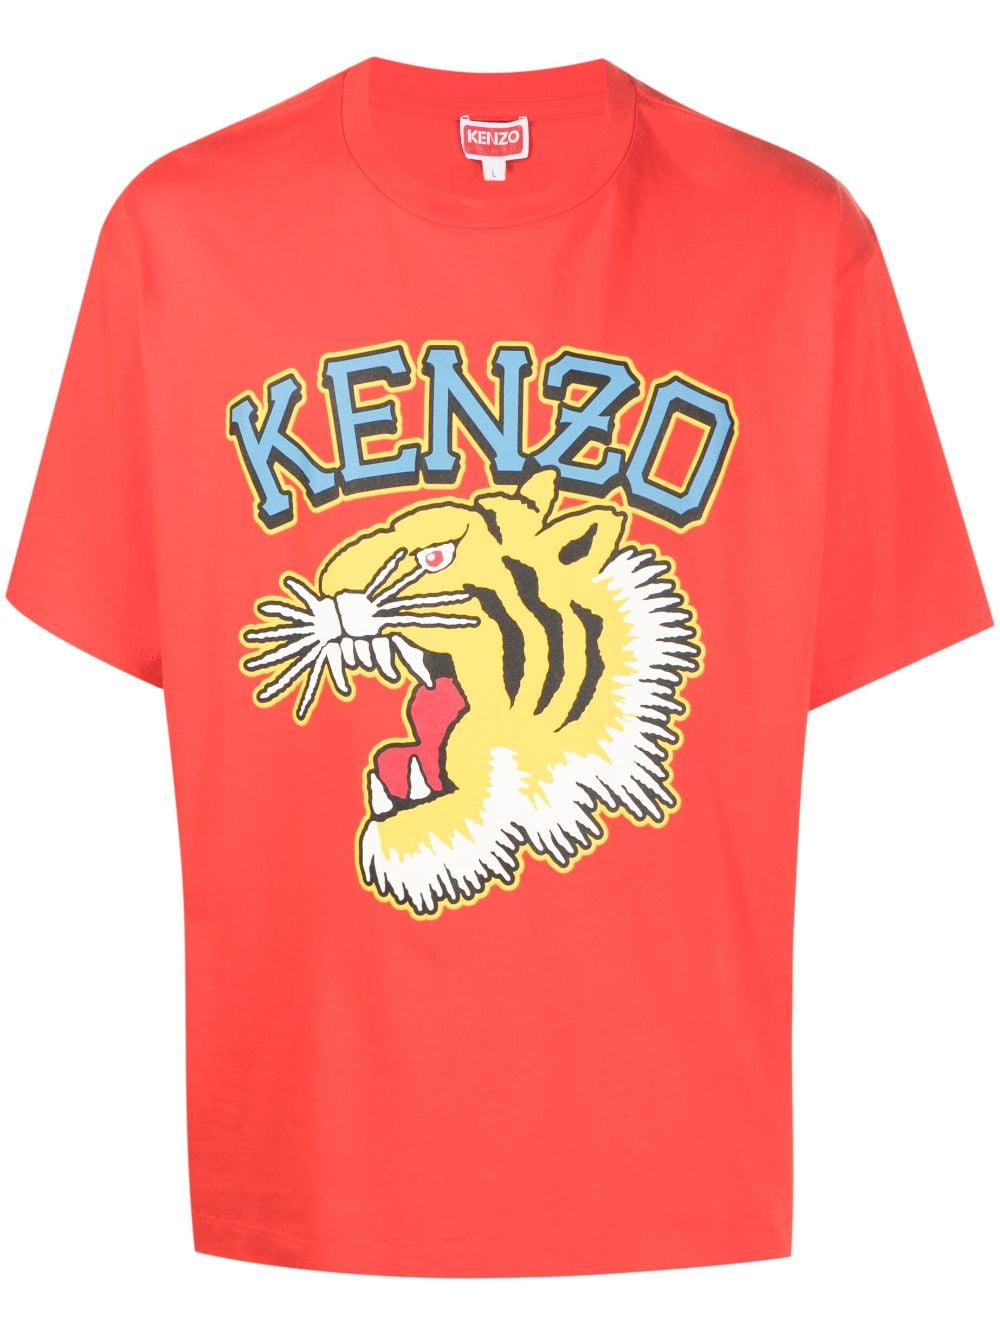 KENZO Tシャツ(M)